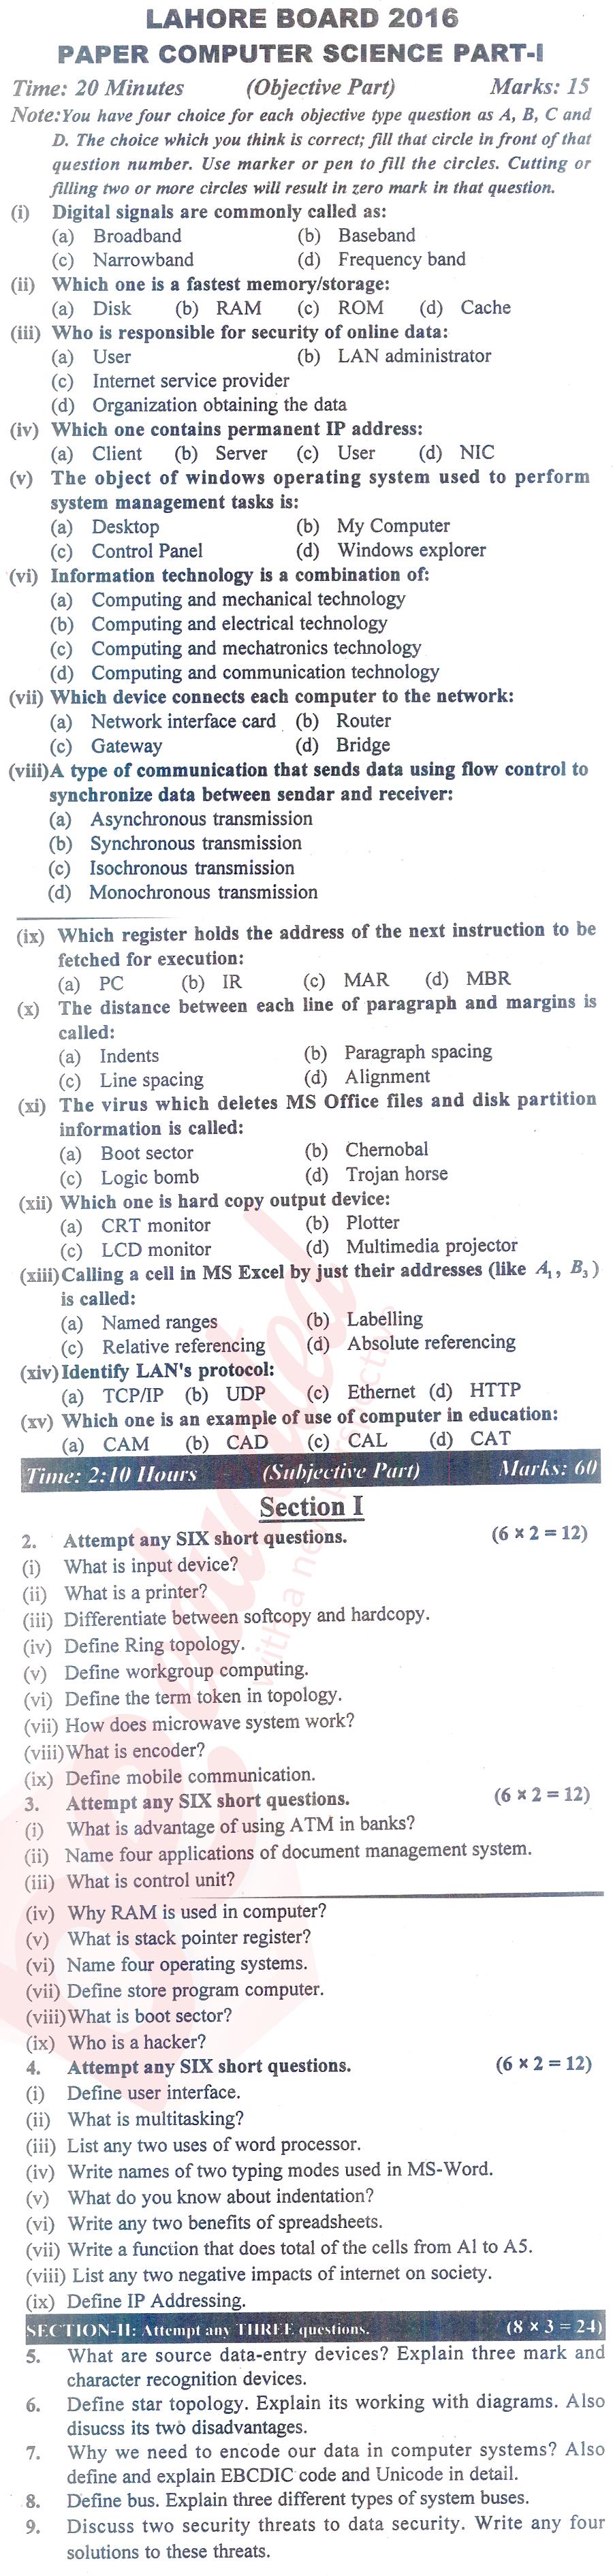 Computer Science ICS Part 1 Past Paper Group 1 BISE Lahore 2016